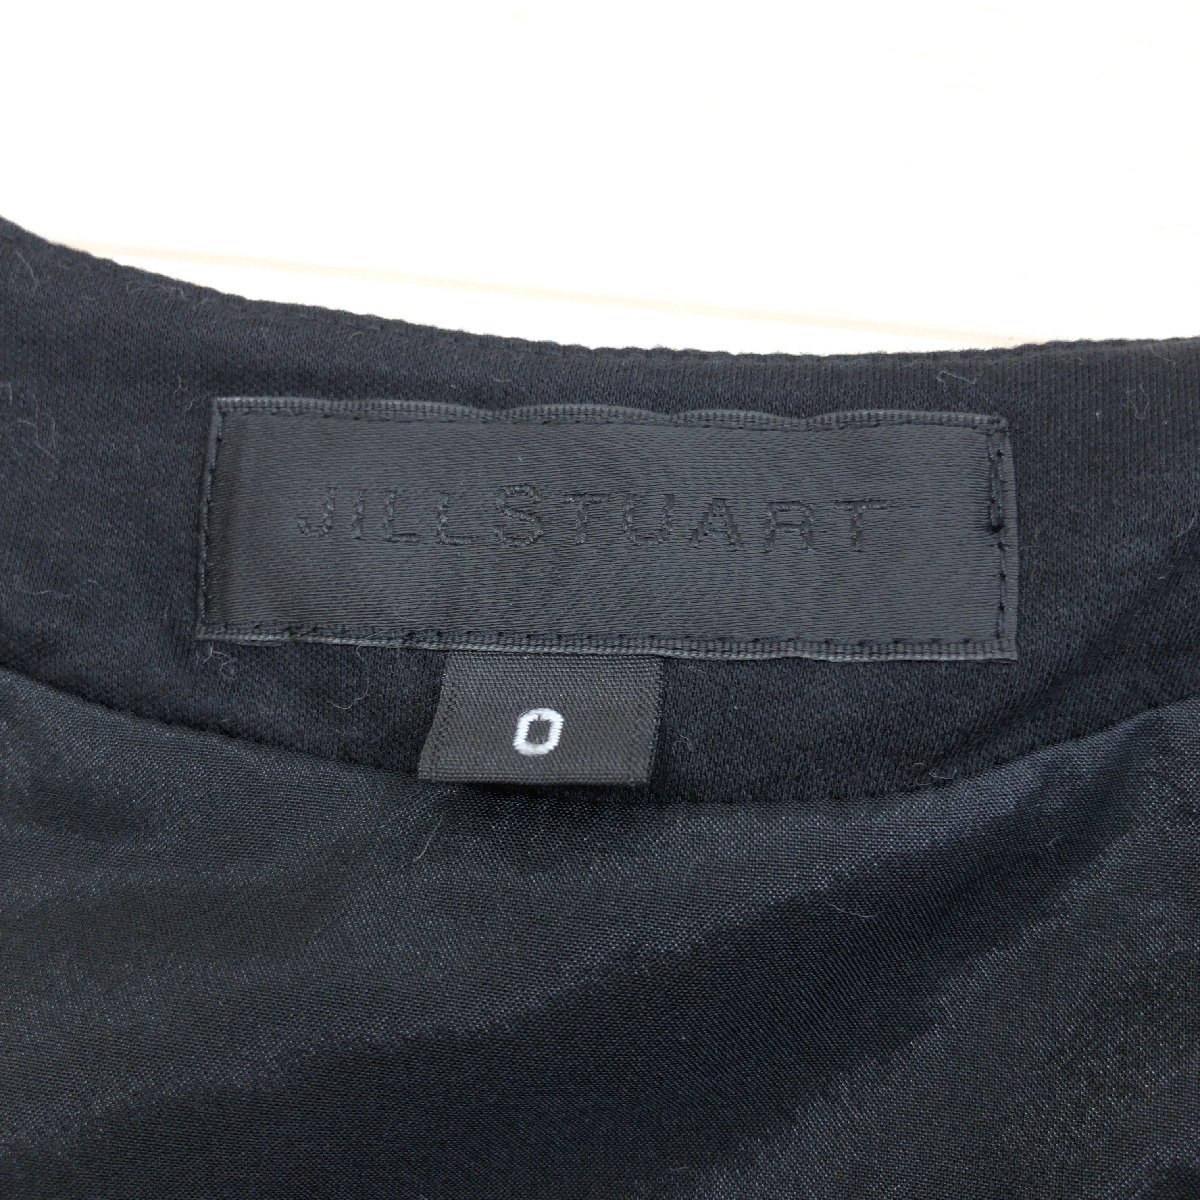 JILL STUART ジルスチュアート リボン装飾 フレア ドレス ワンピース 0(S) 黒 ブラック ノースリーブ 日本製 国内正規品 レディース 女性用_画像3